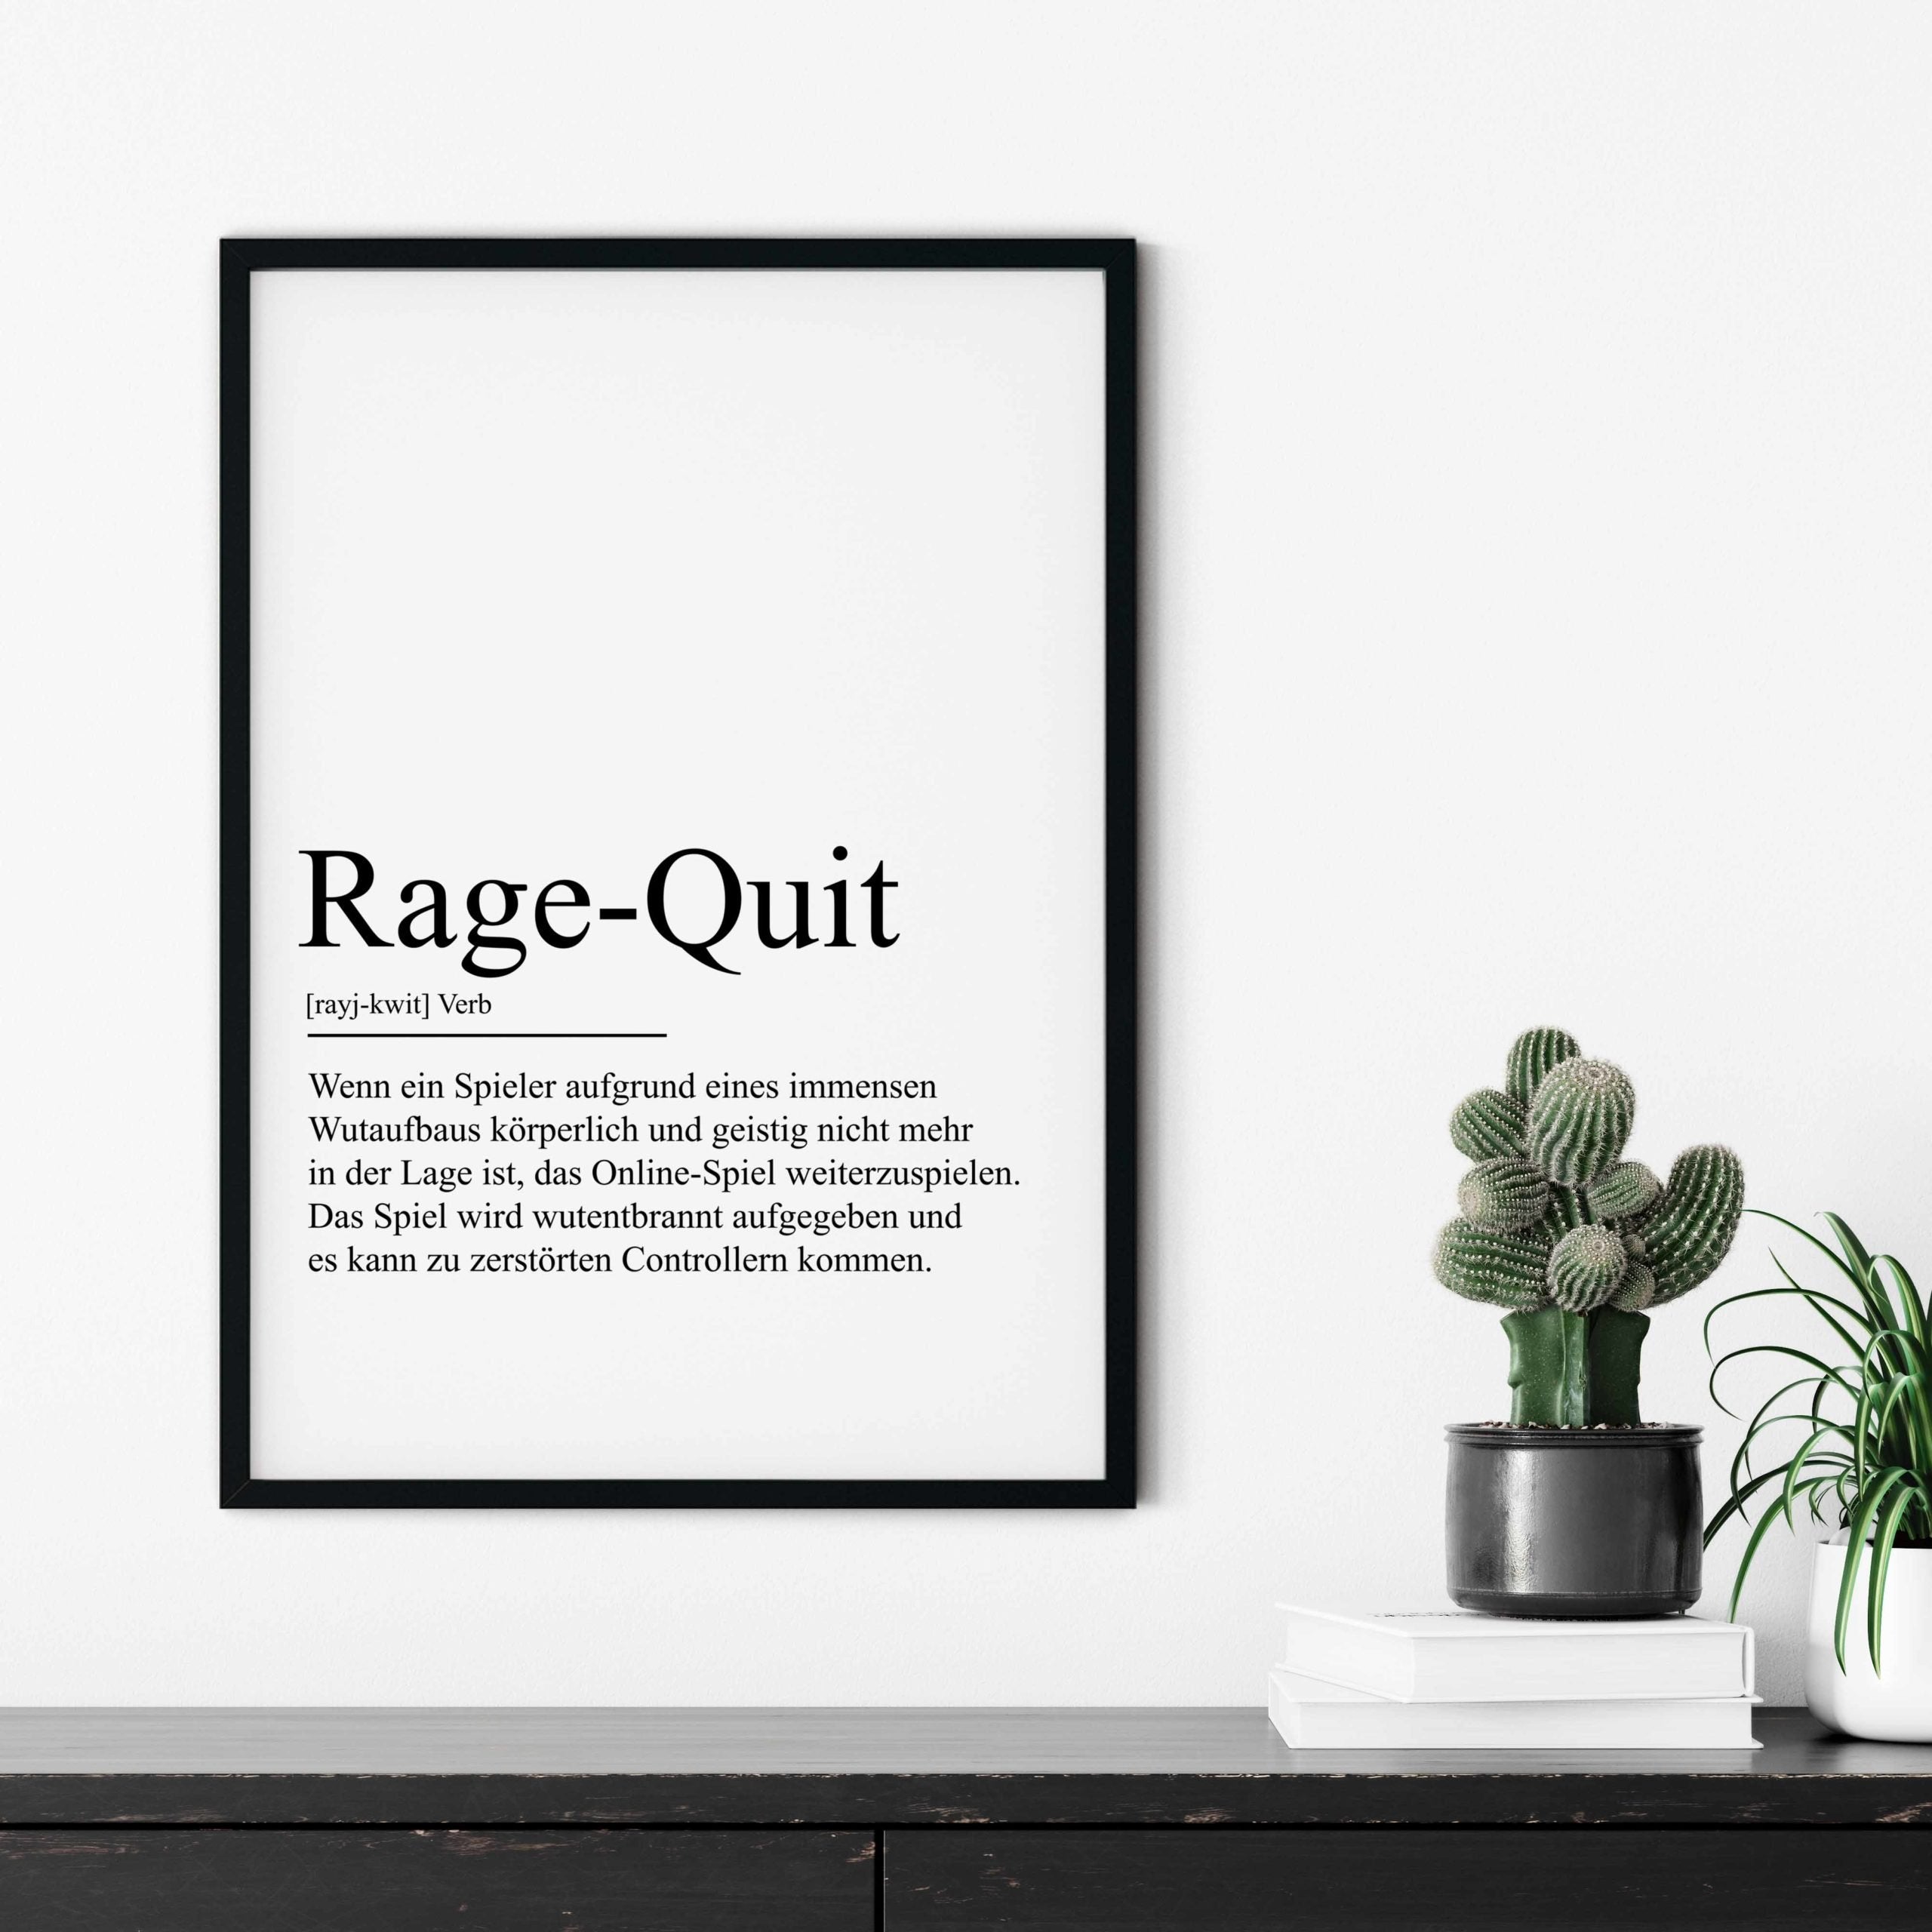 rage-quit - Definition Print